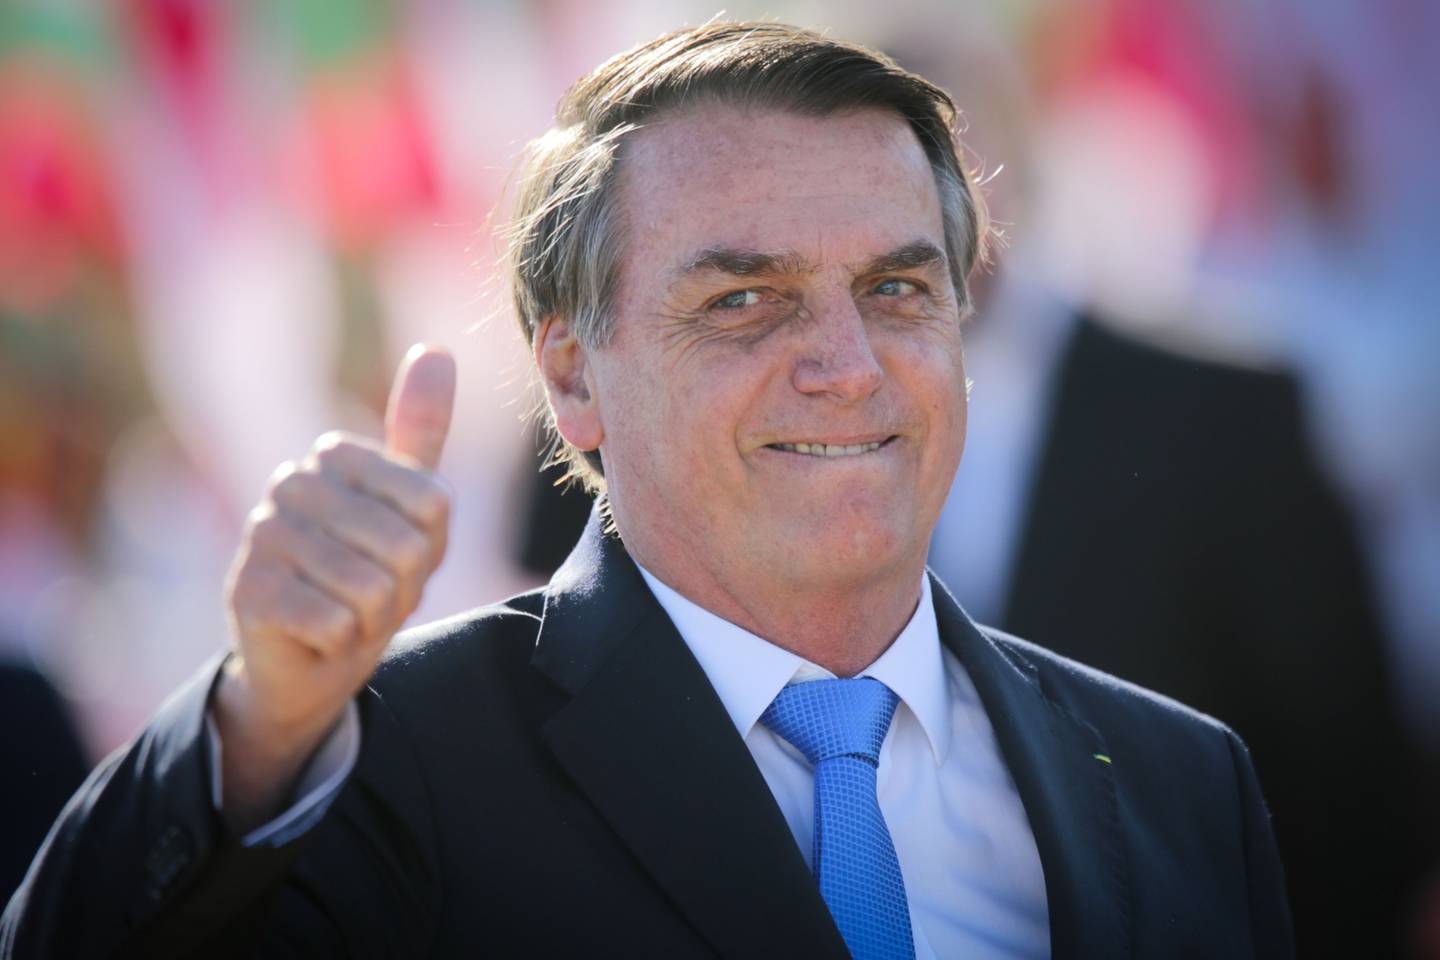 President Jair Bolsonaro has rushed to reinvigorate Latin America’s largest economy and close the gap behind his main election challenger, Luiz Inacio Lula da Silva.